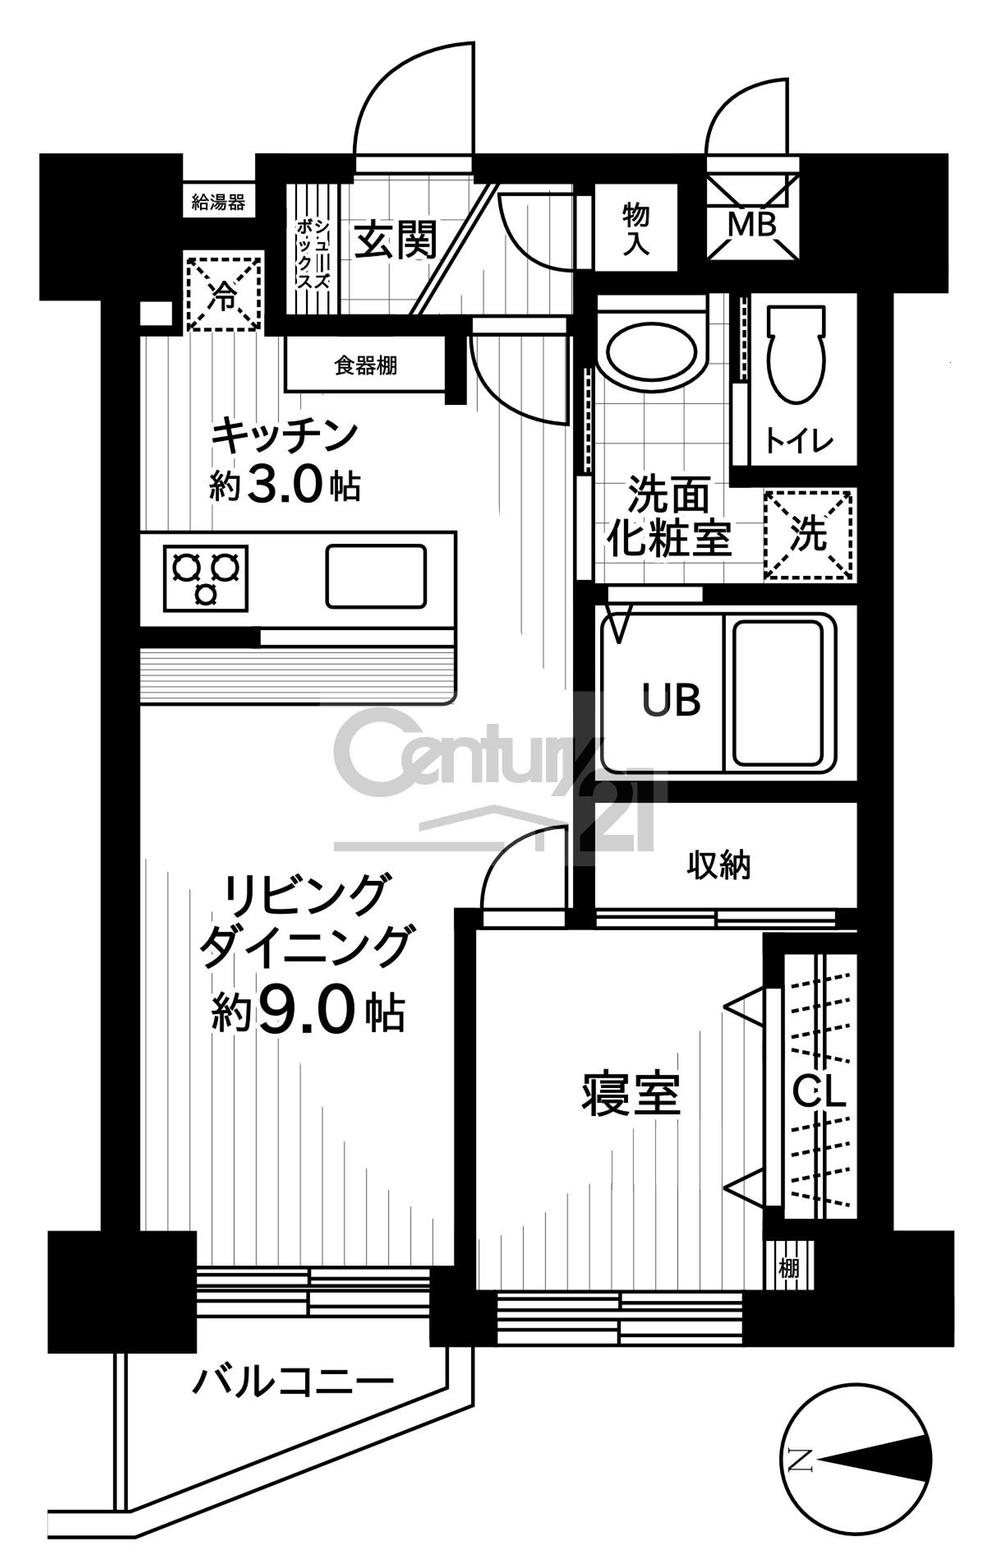 Floor plan. 1LDK, Price 24,300,000 yen, Footprint 38.5 sq m , Balcony area 2.5 sq m 1LDK 38.5 sq m